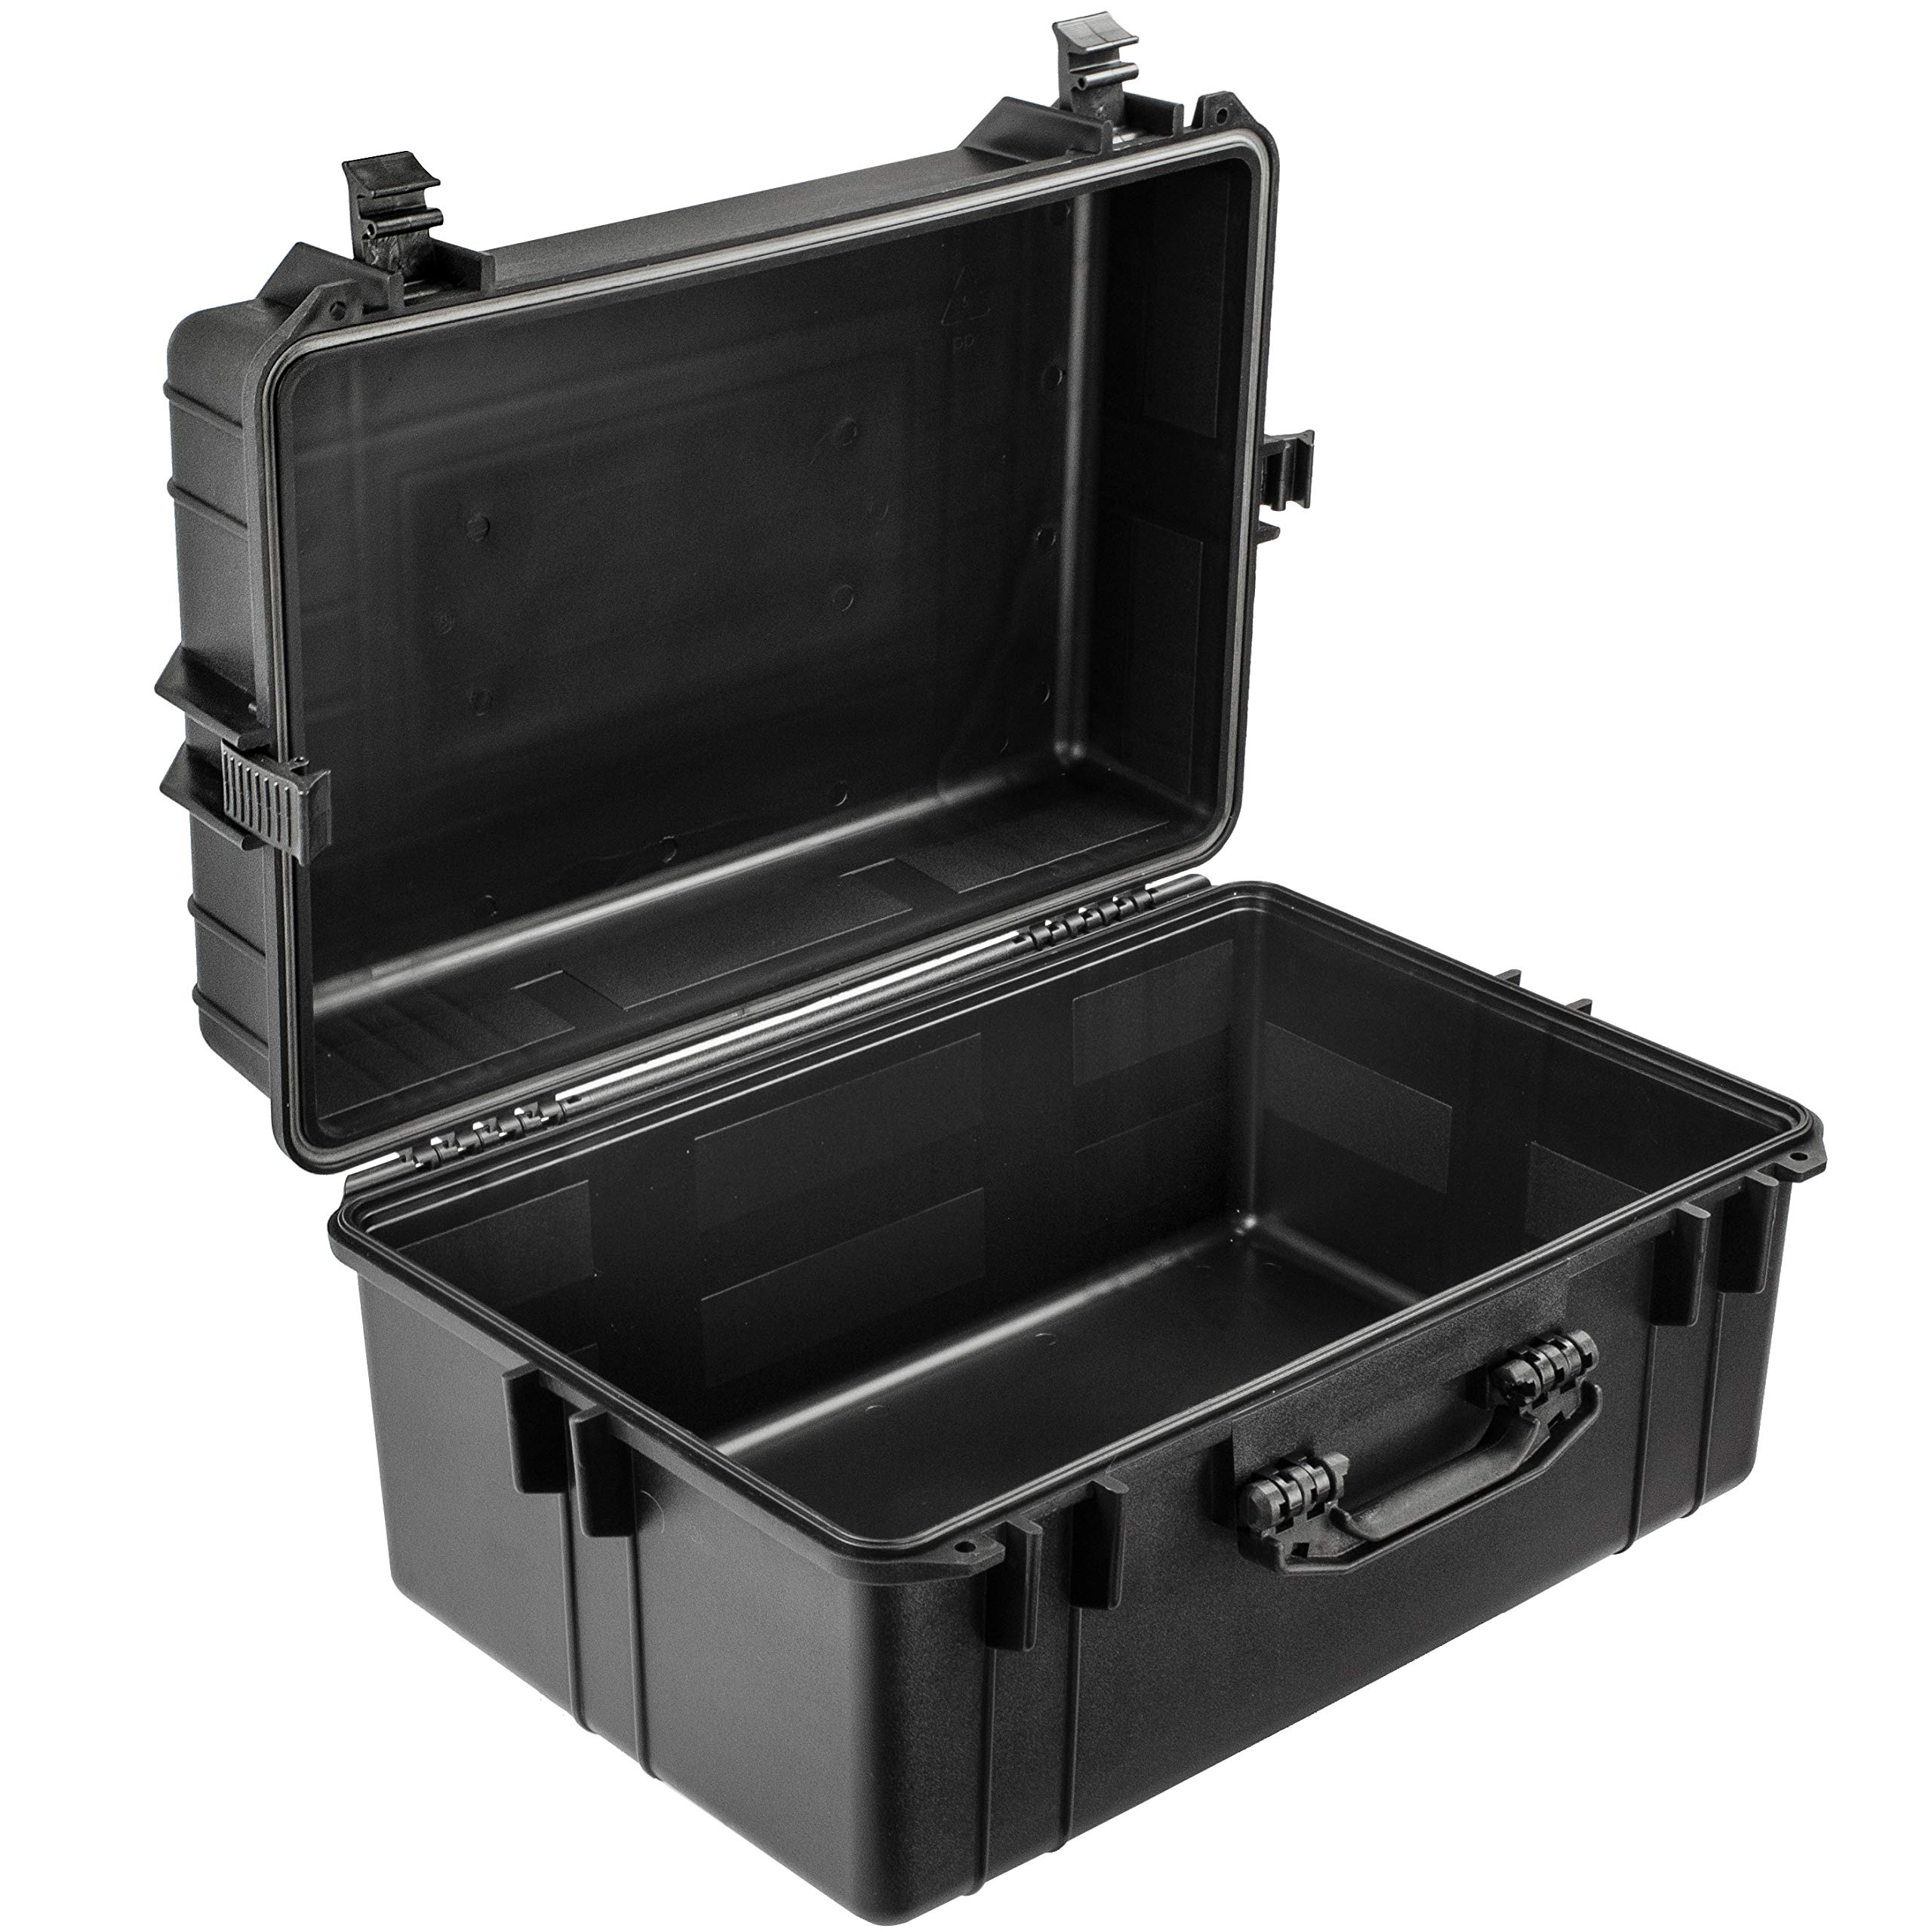 Eylar XL 24 inch Deep Protective Gear, Camera, Tools, Equipment Hard Case Waterproof w/Foam Black